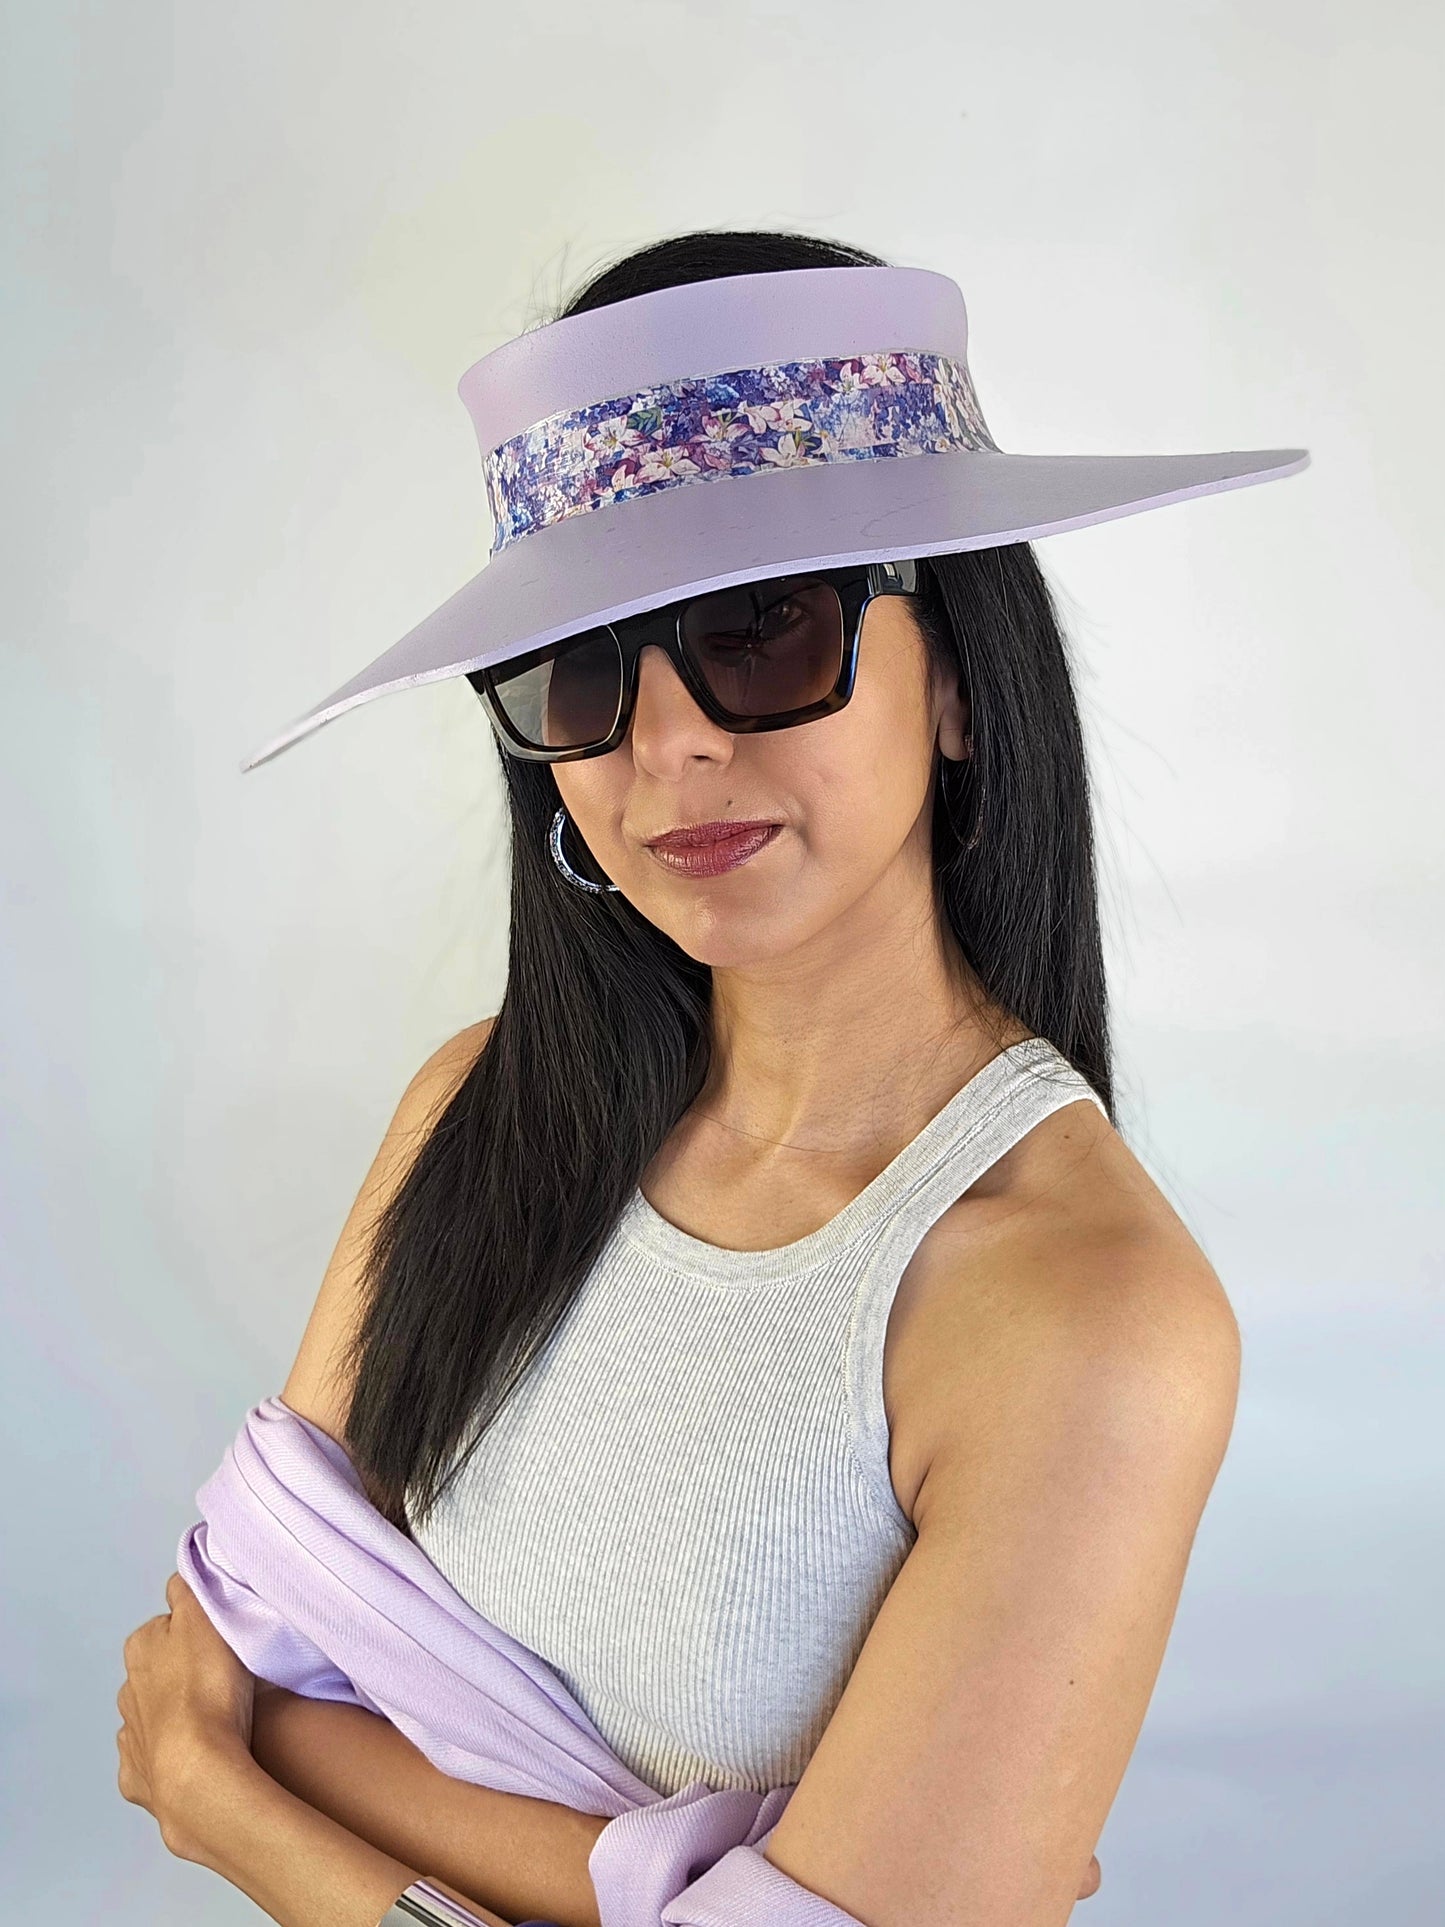 Lilac Purple Lotus Sun Visor Hat with Elegant Purple Floral Band and Silver Paint Splatter Effect: 1950s, Walks, Brunch, Asian, Golf, Summer, Church, No Headache, Pool, Beach